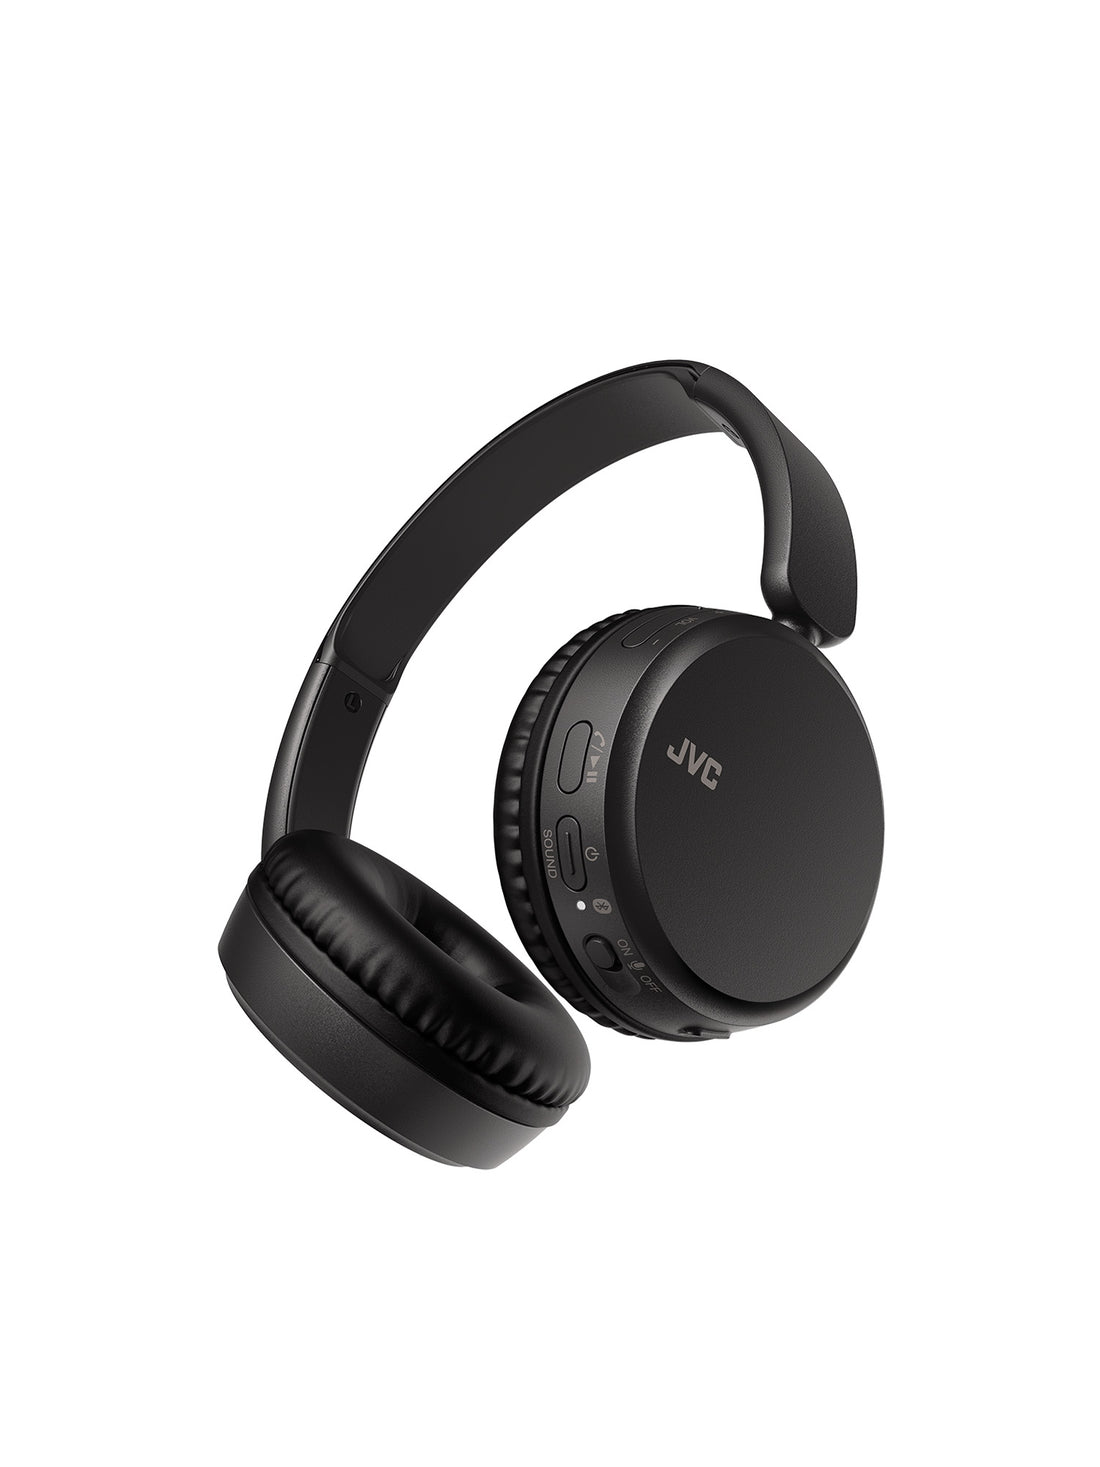 HA-S36W-B in black wireless bluetooth headphones controls